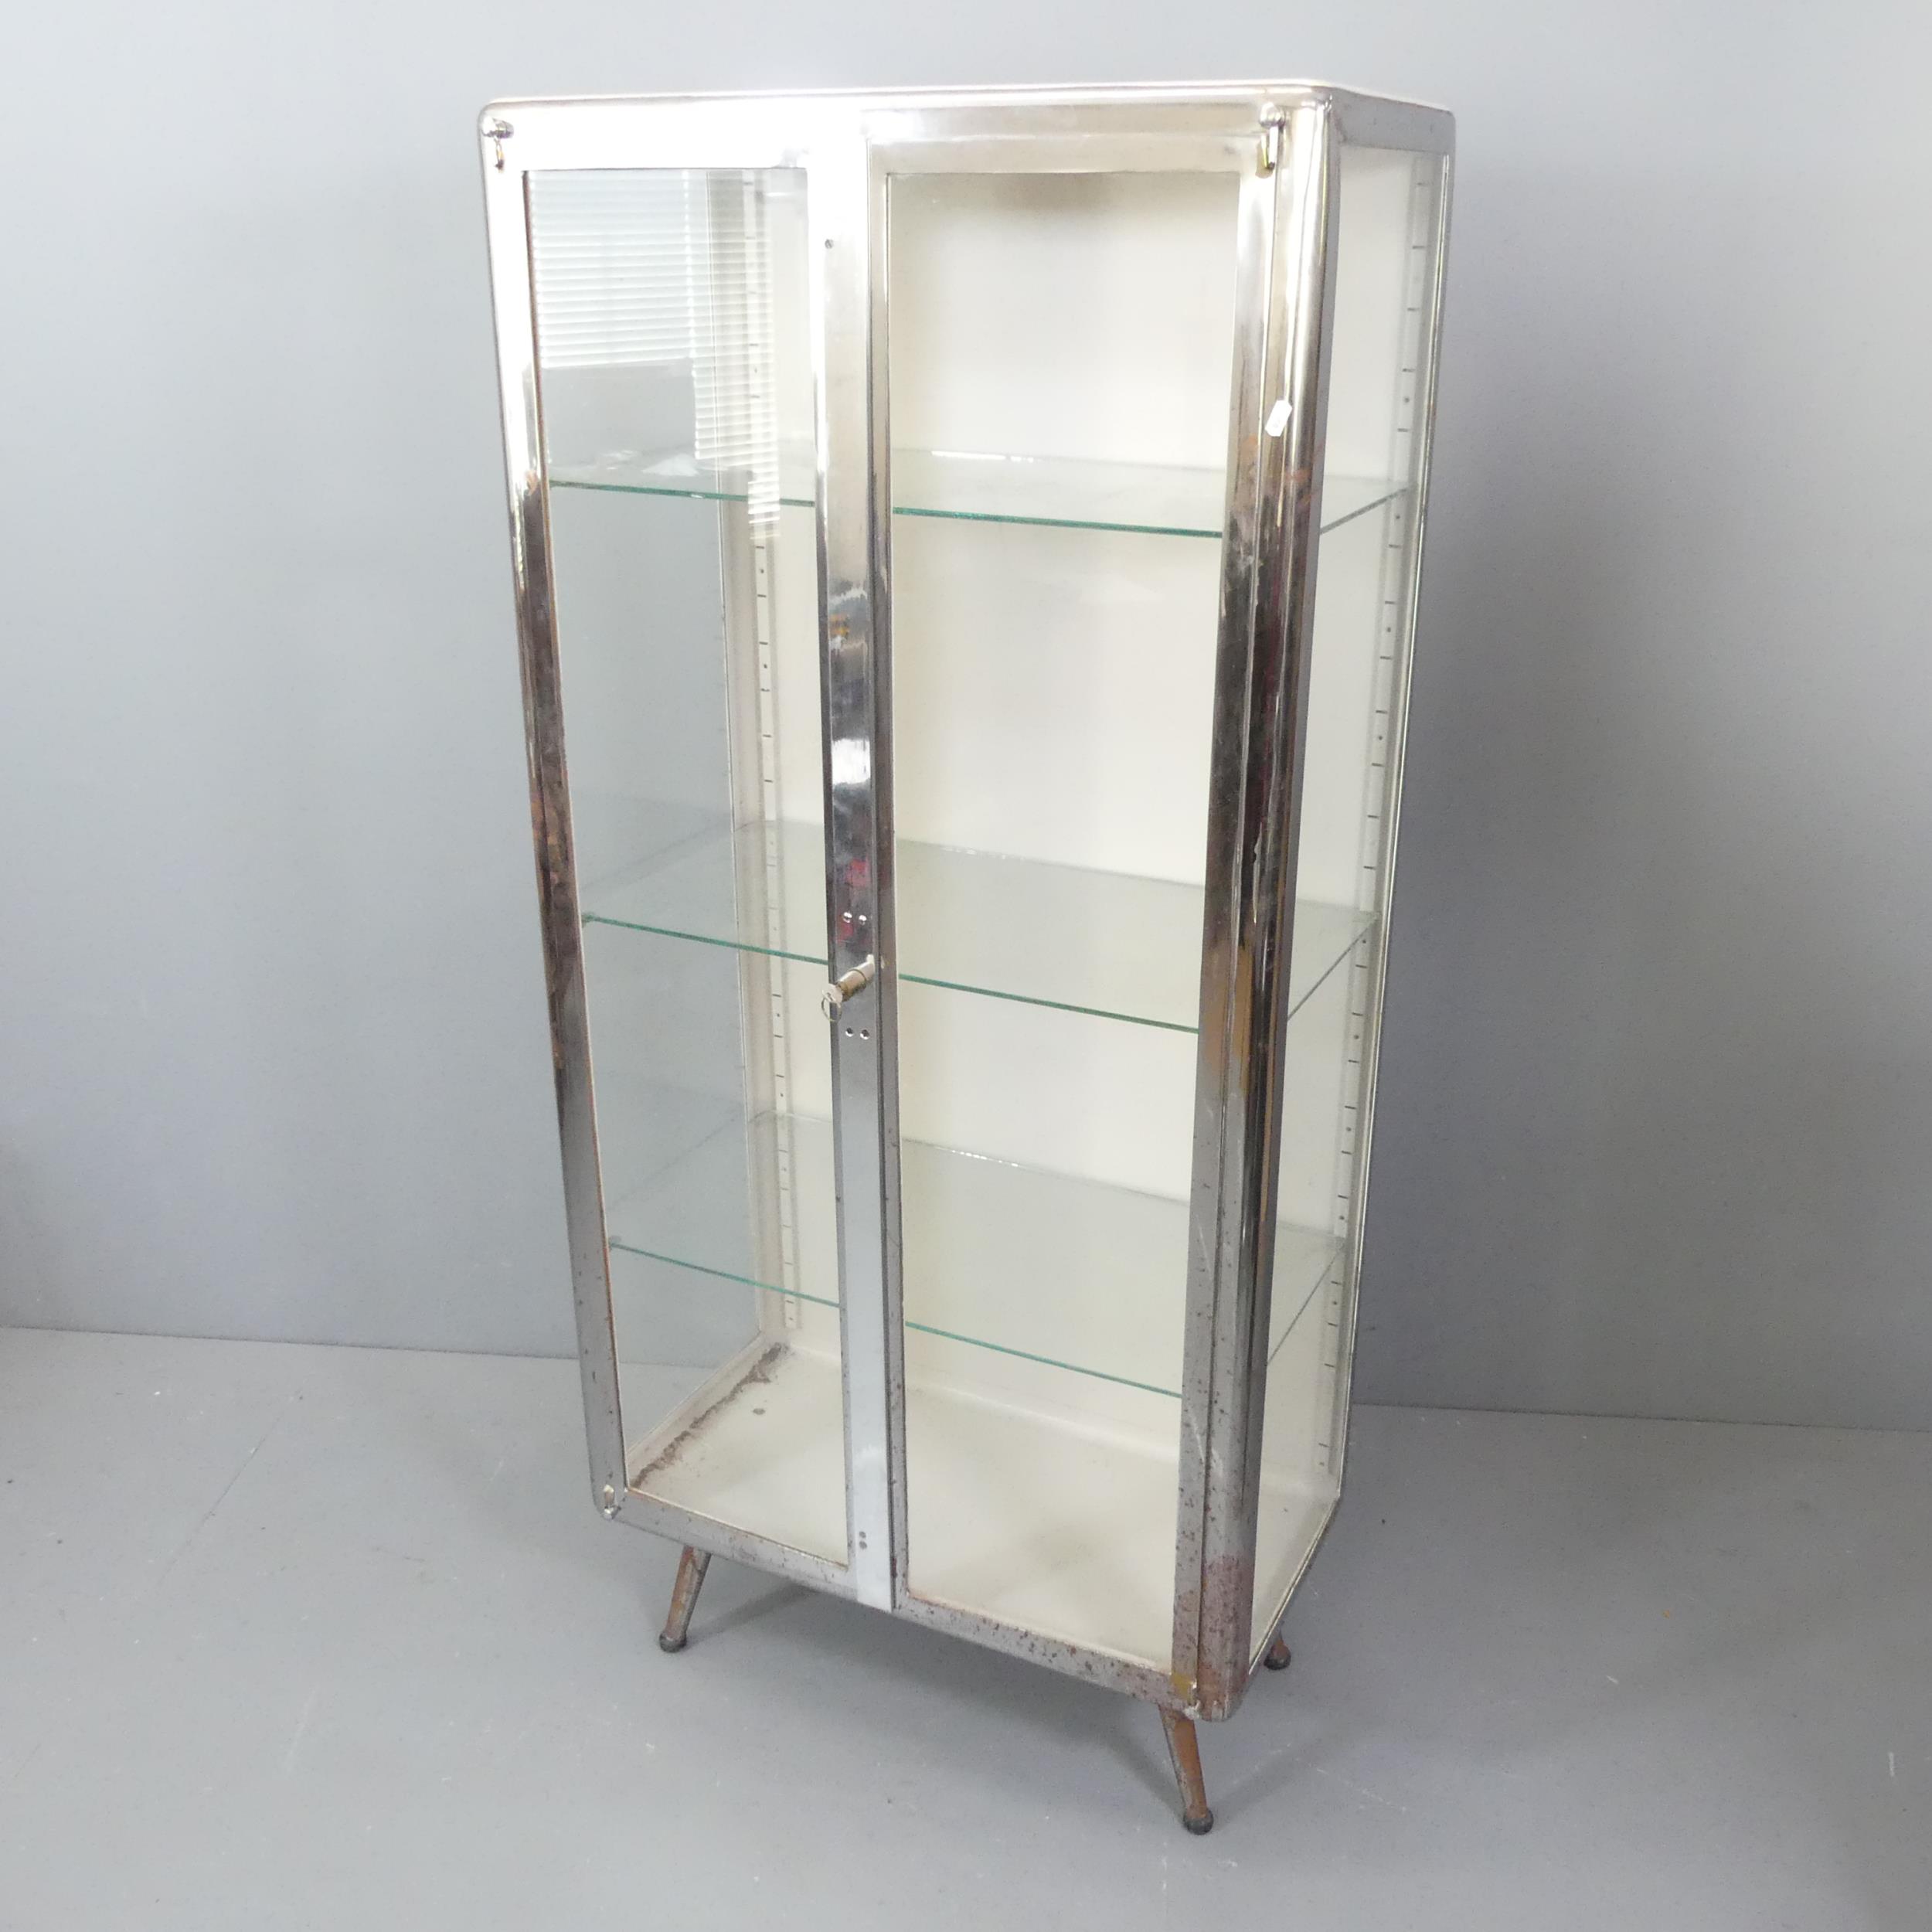 A 1950s glazed medical or dentist's cabinet, with 3 adjustable shelves.75x165x41cm.